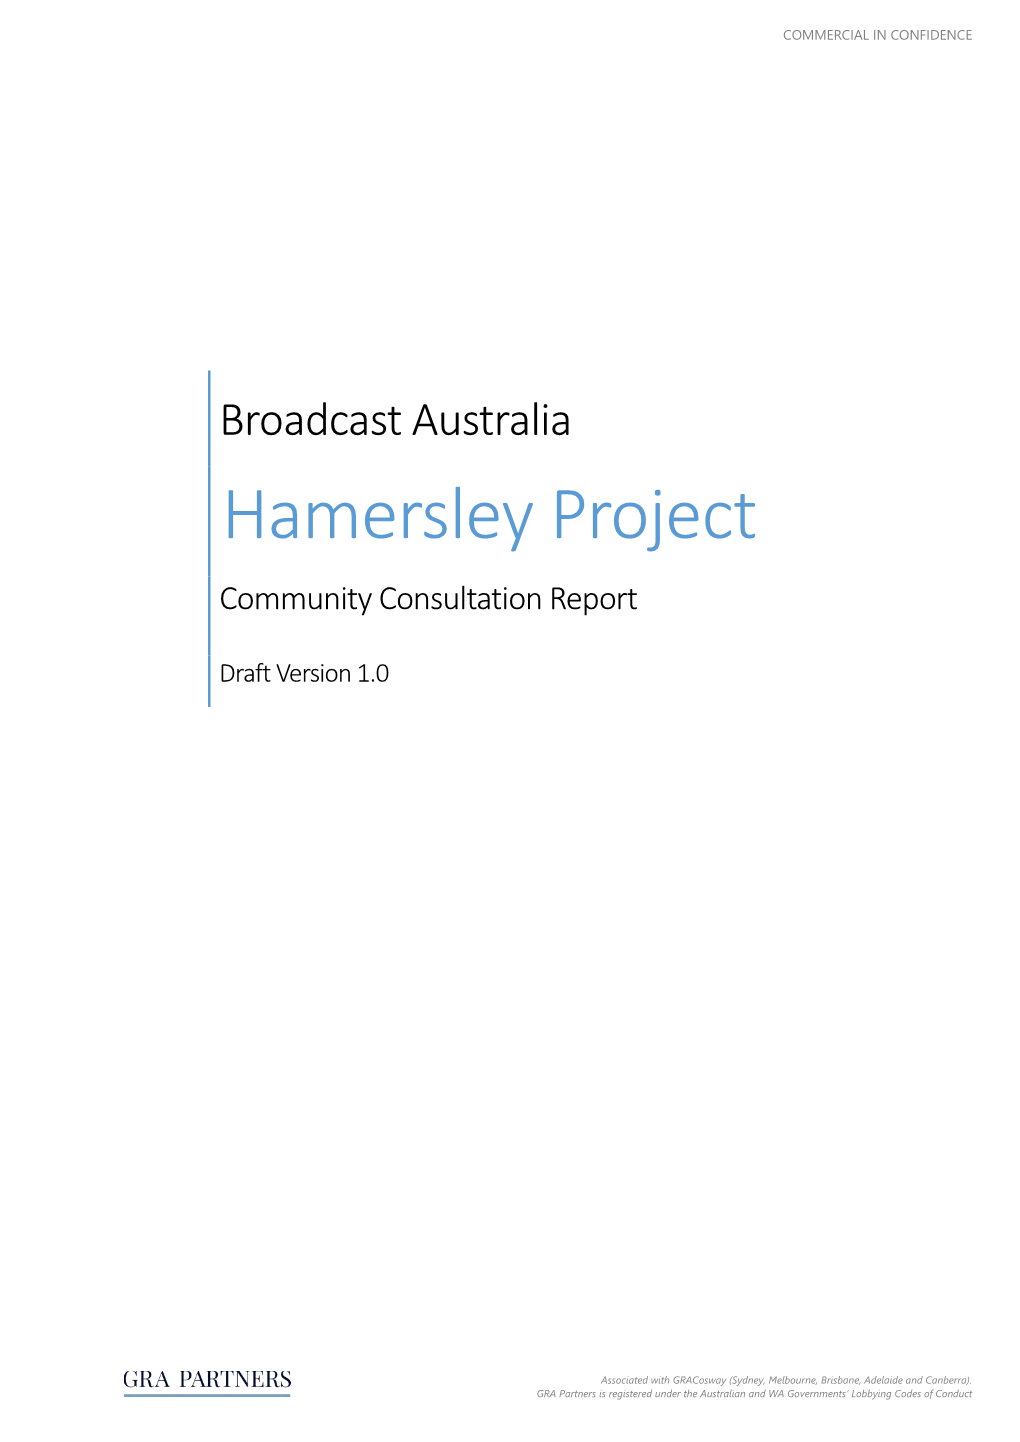 Broadcast Australia Hamersley Project Community Consultation Report